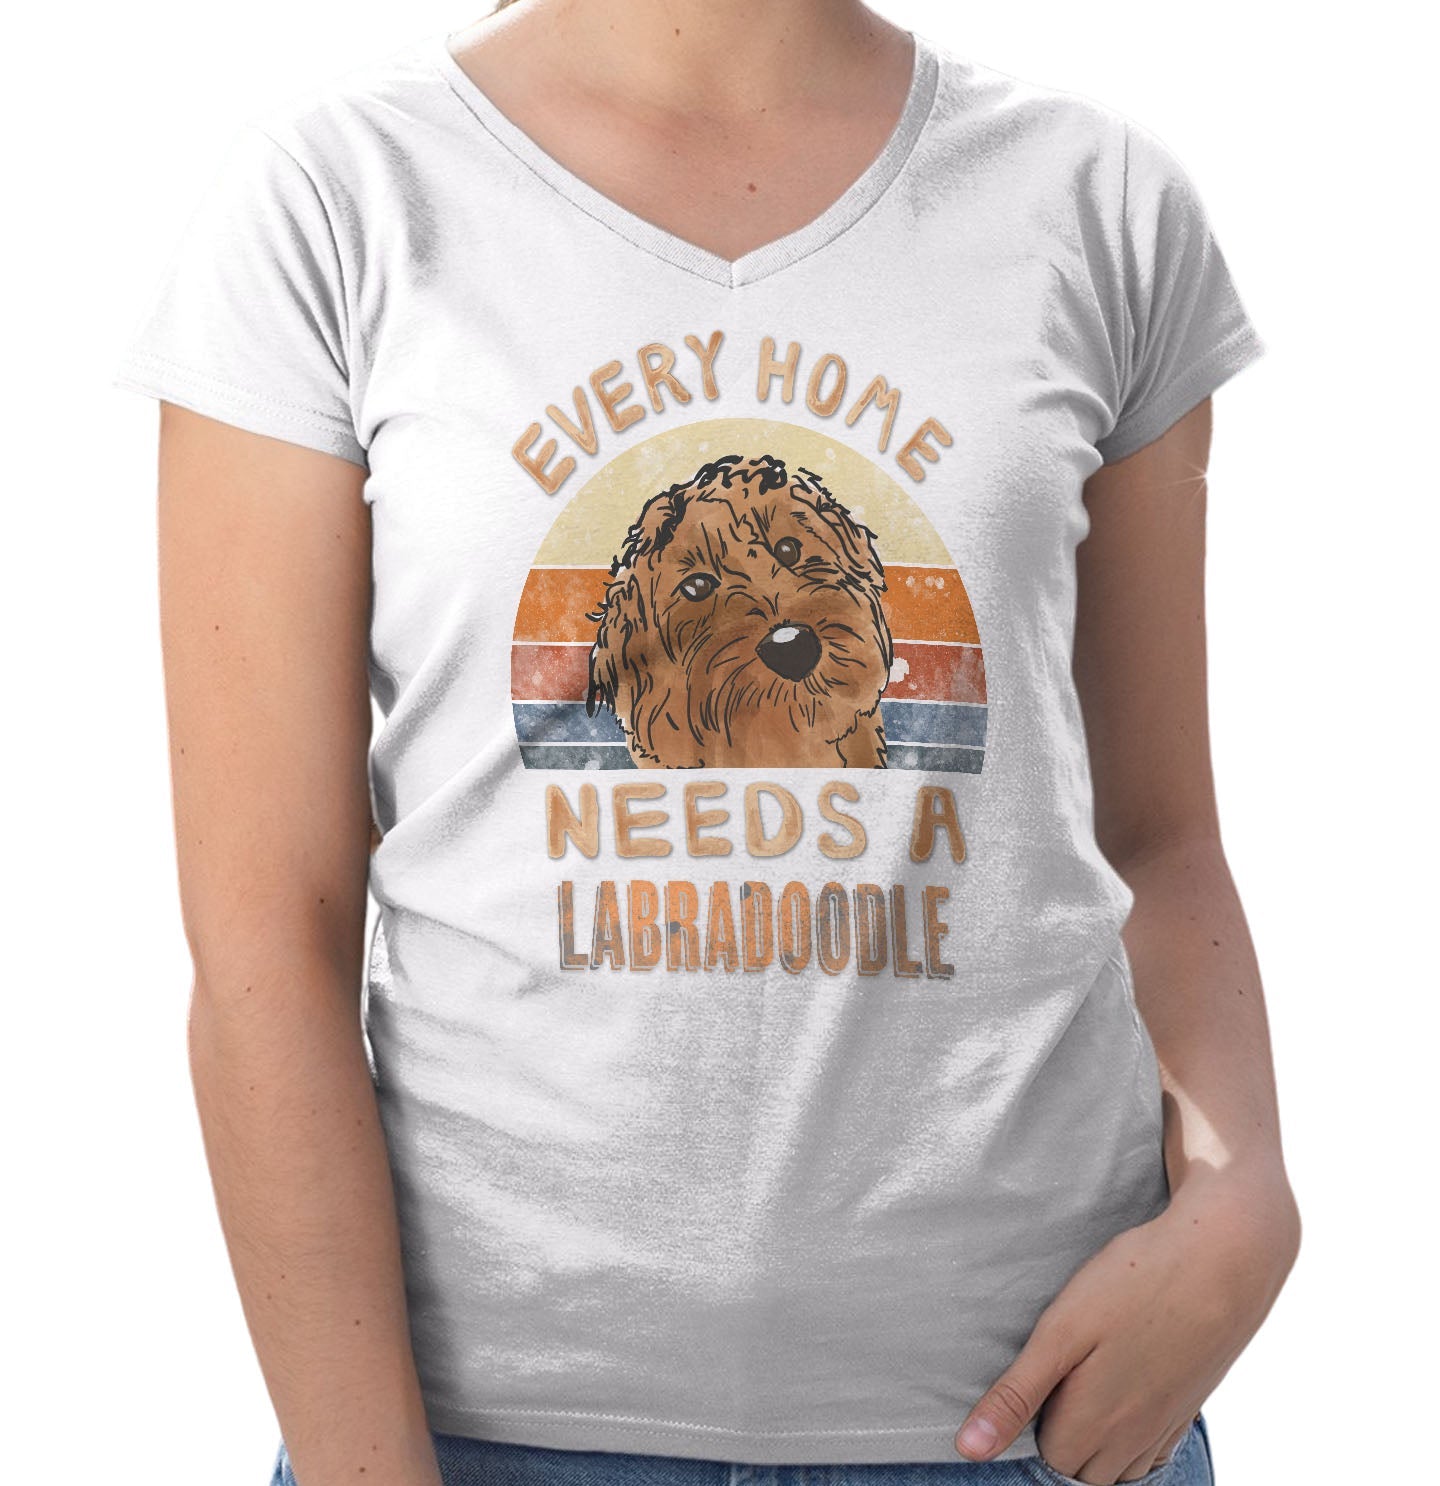 Every Home Needs a Labradoodle - Women's V-Neck T-Shirt